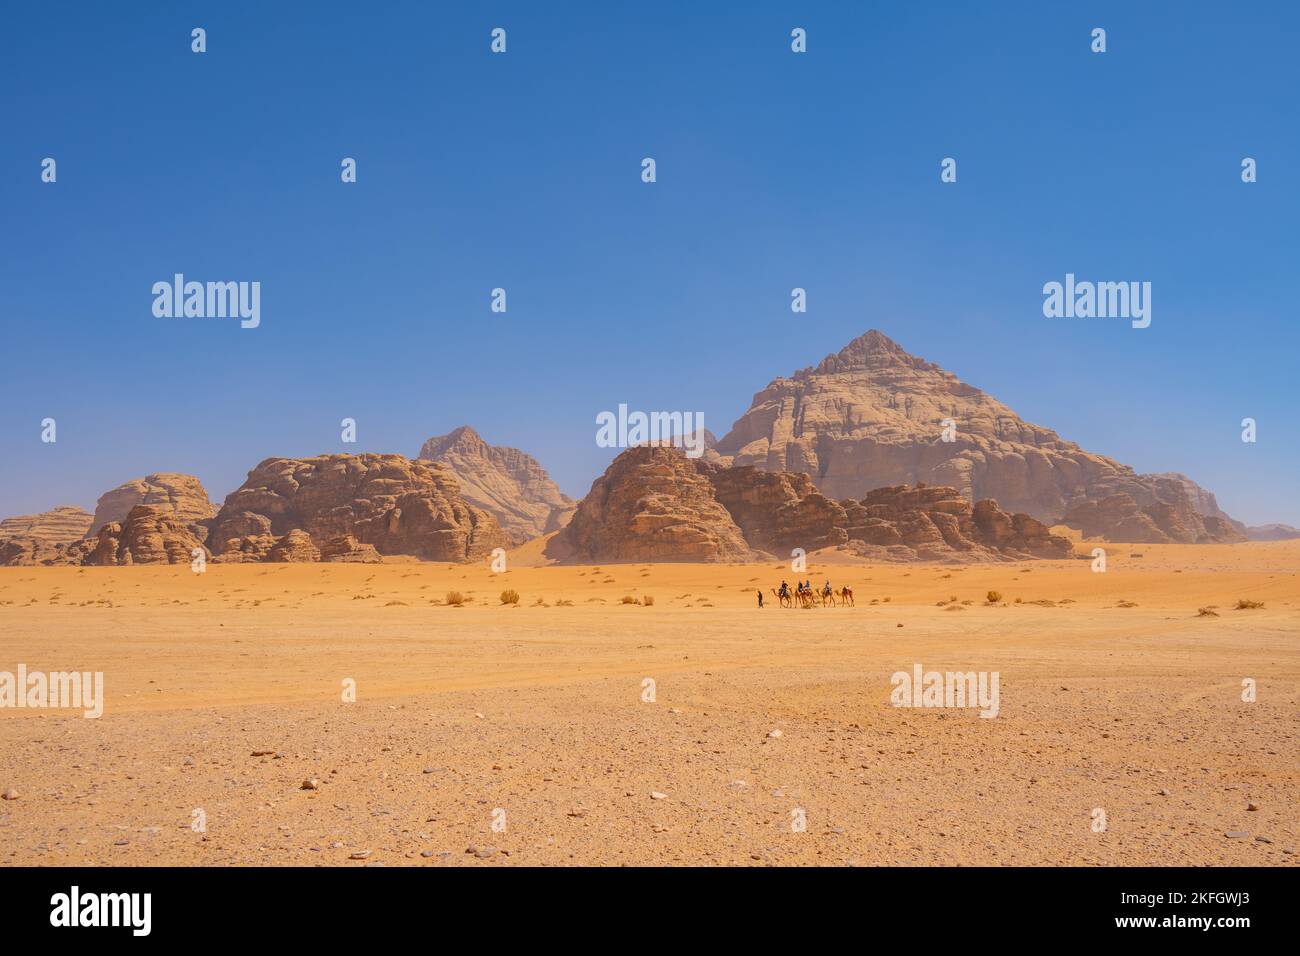 Camels in the Mountains of Wadi Rum Jordan Stock Photo